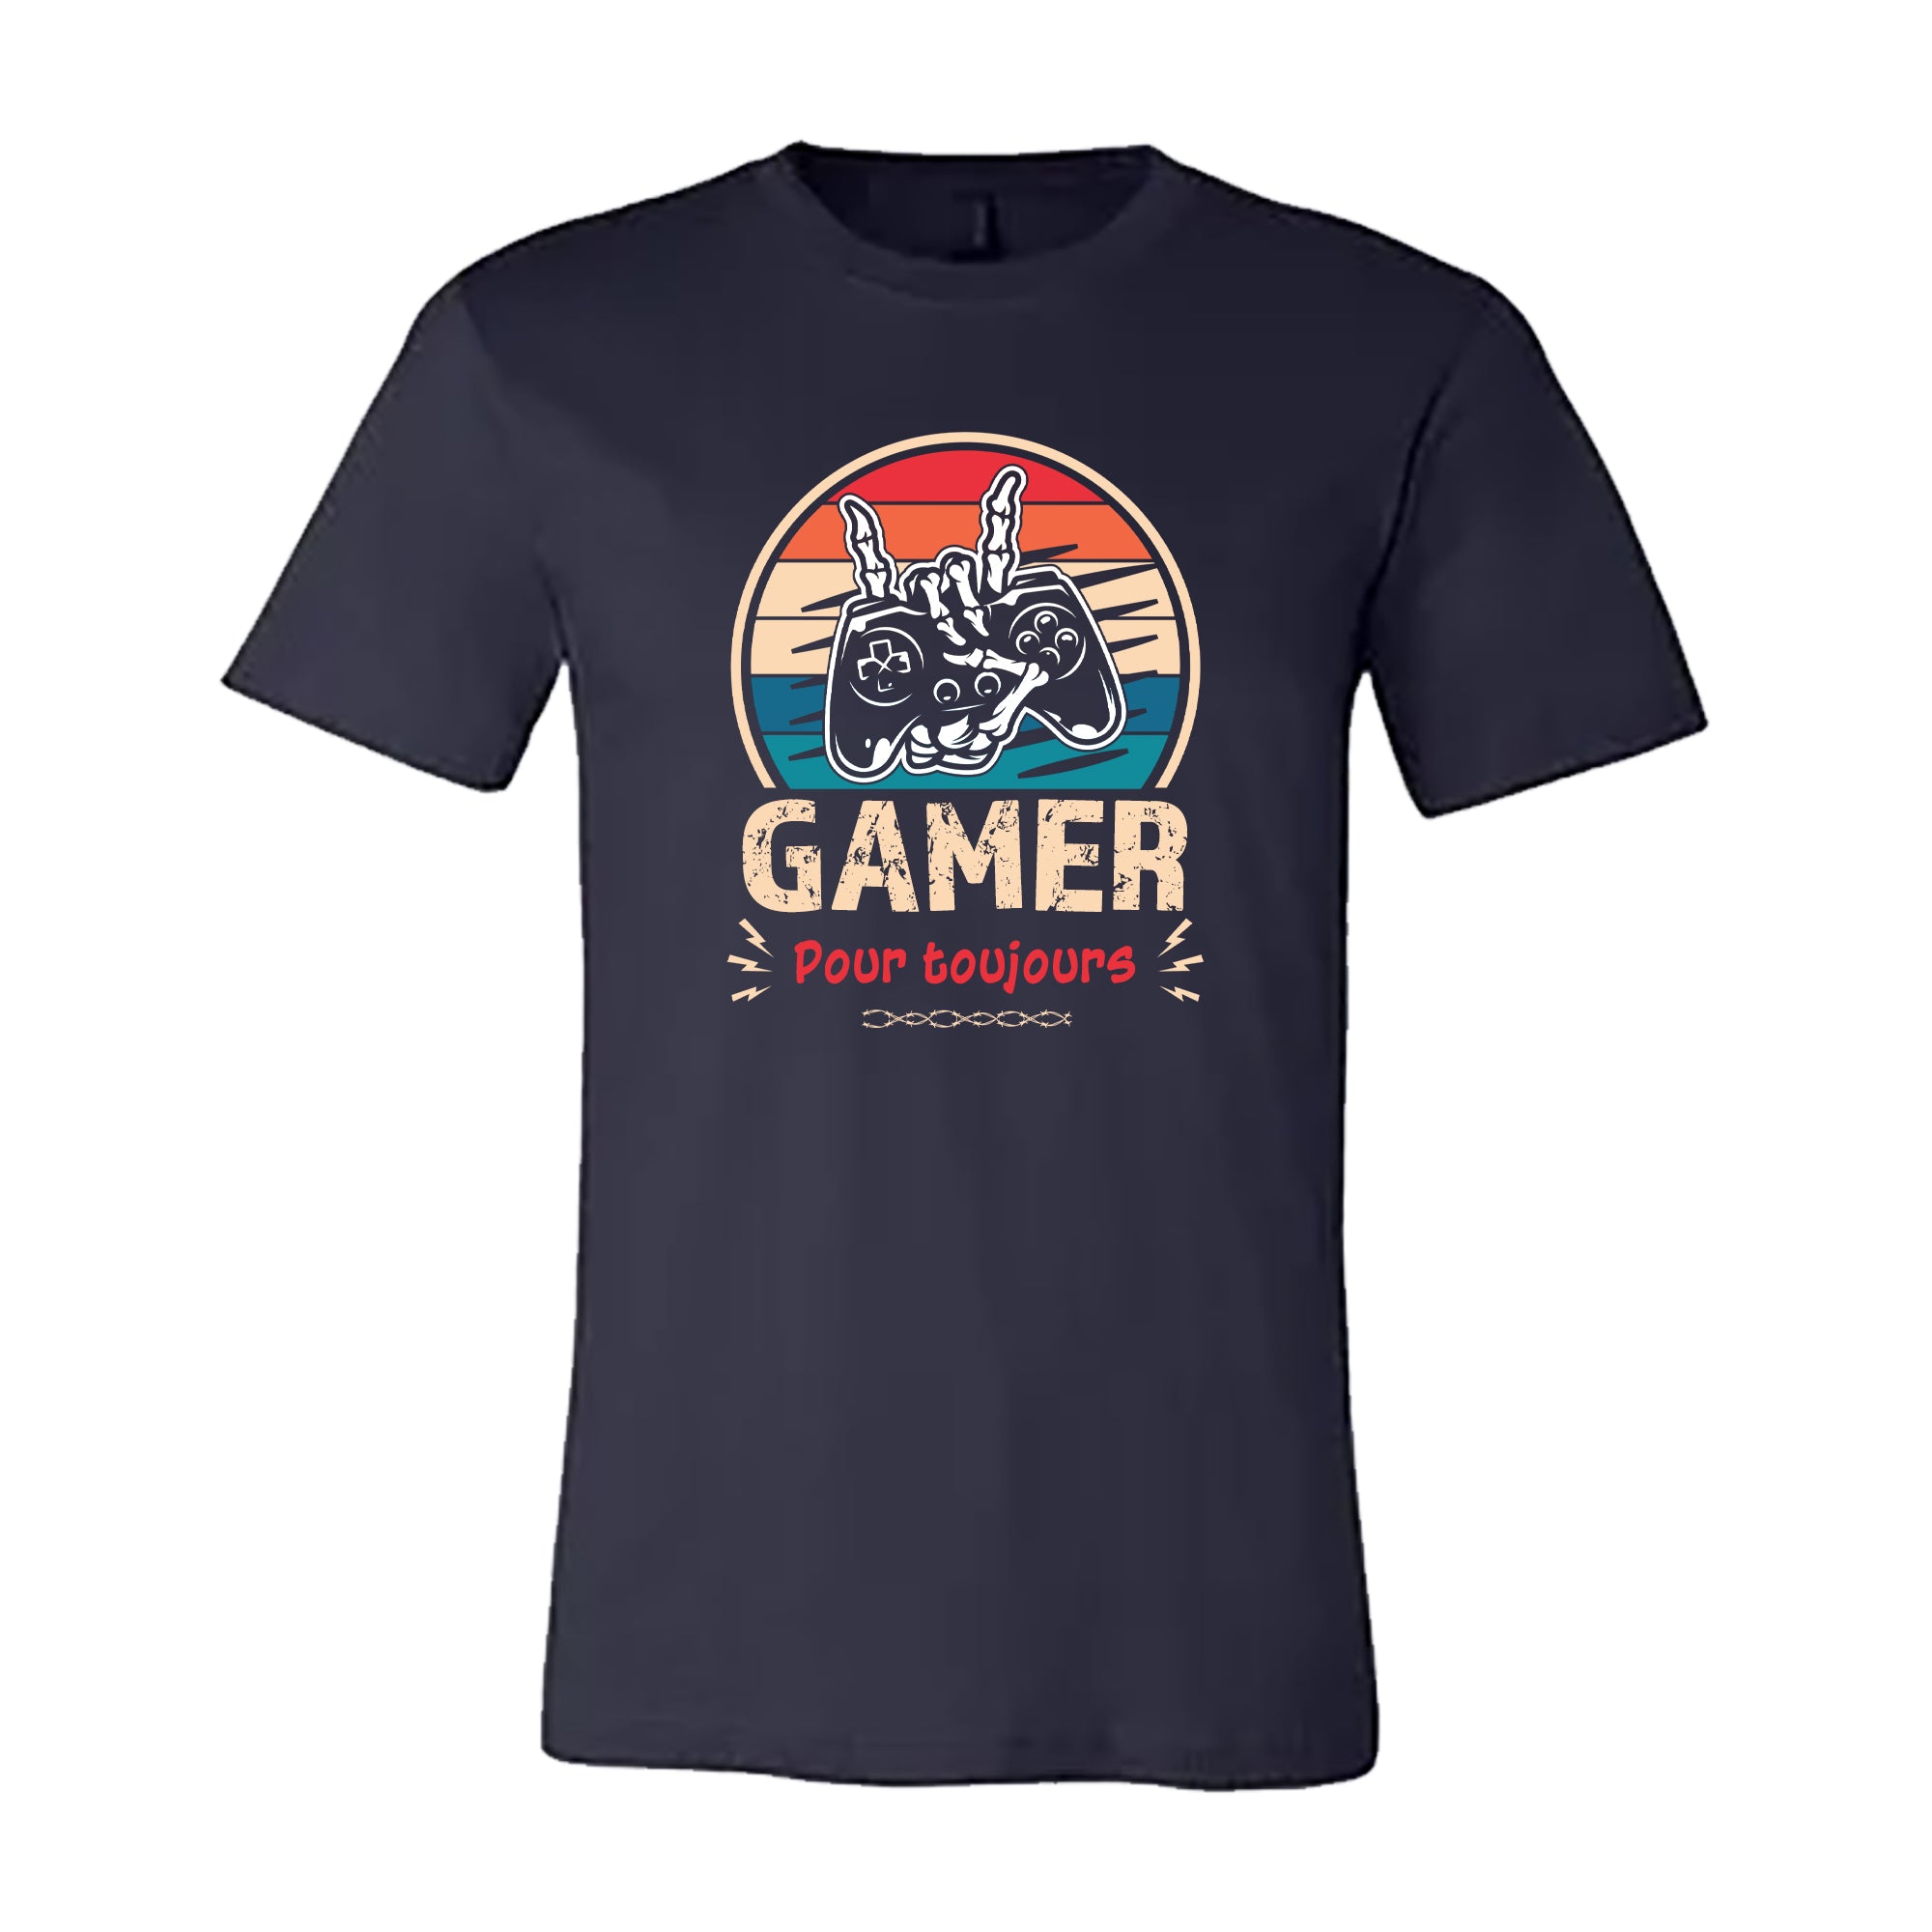 T-shirt - Gamer pour toujours